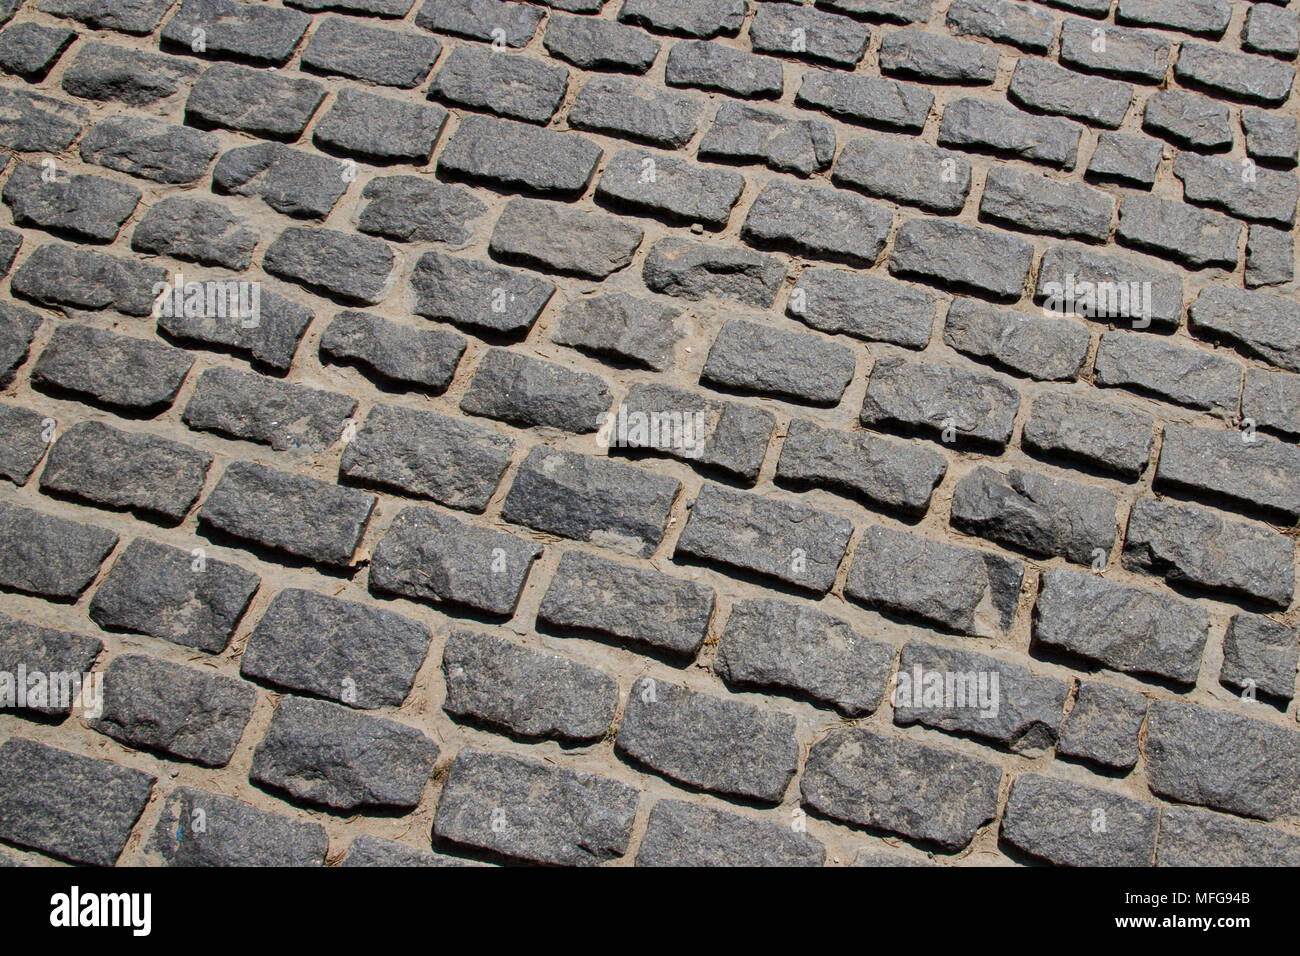 Сobblestone pavement pattern texture background image. Stock Photo